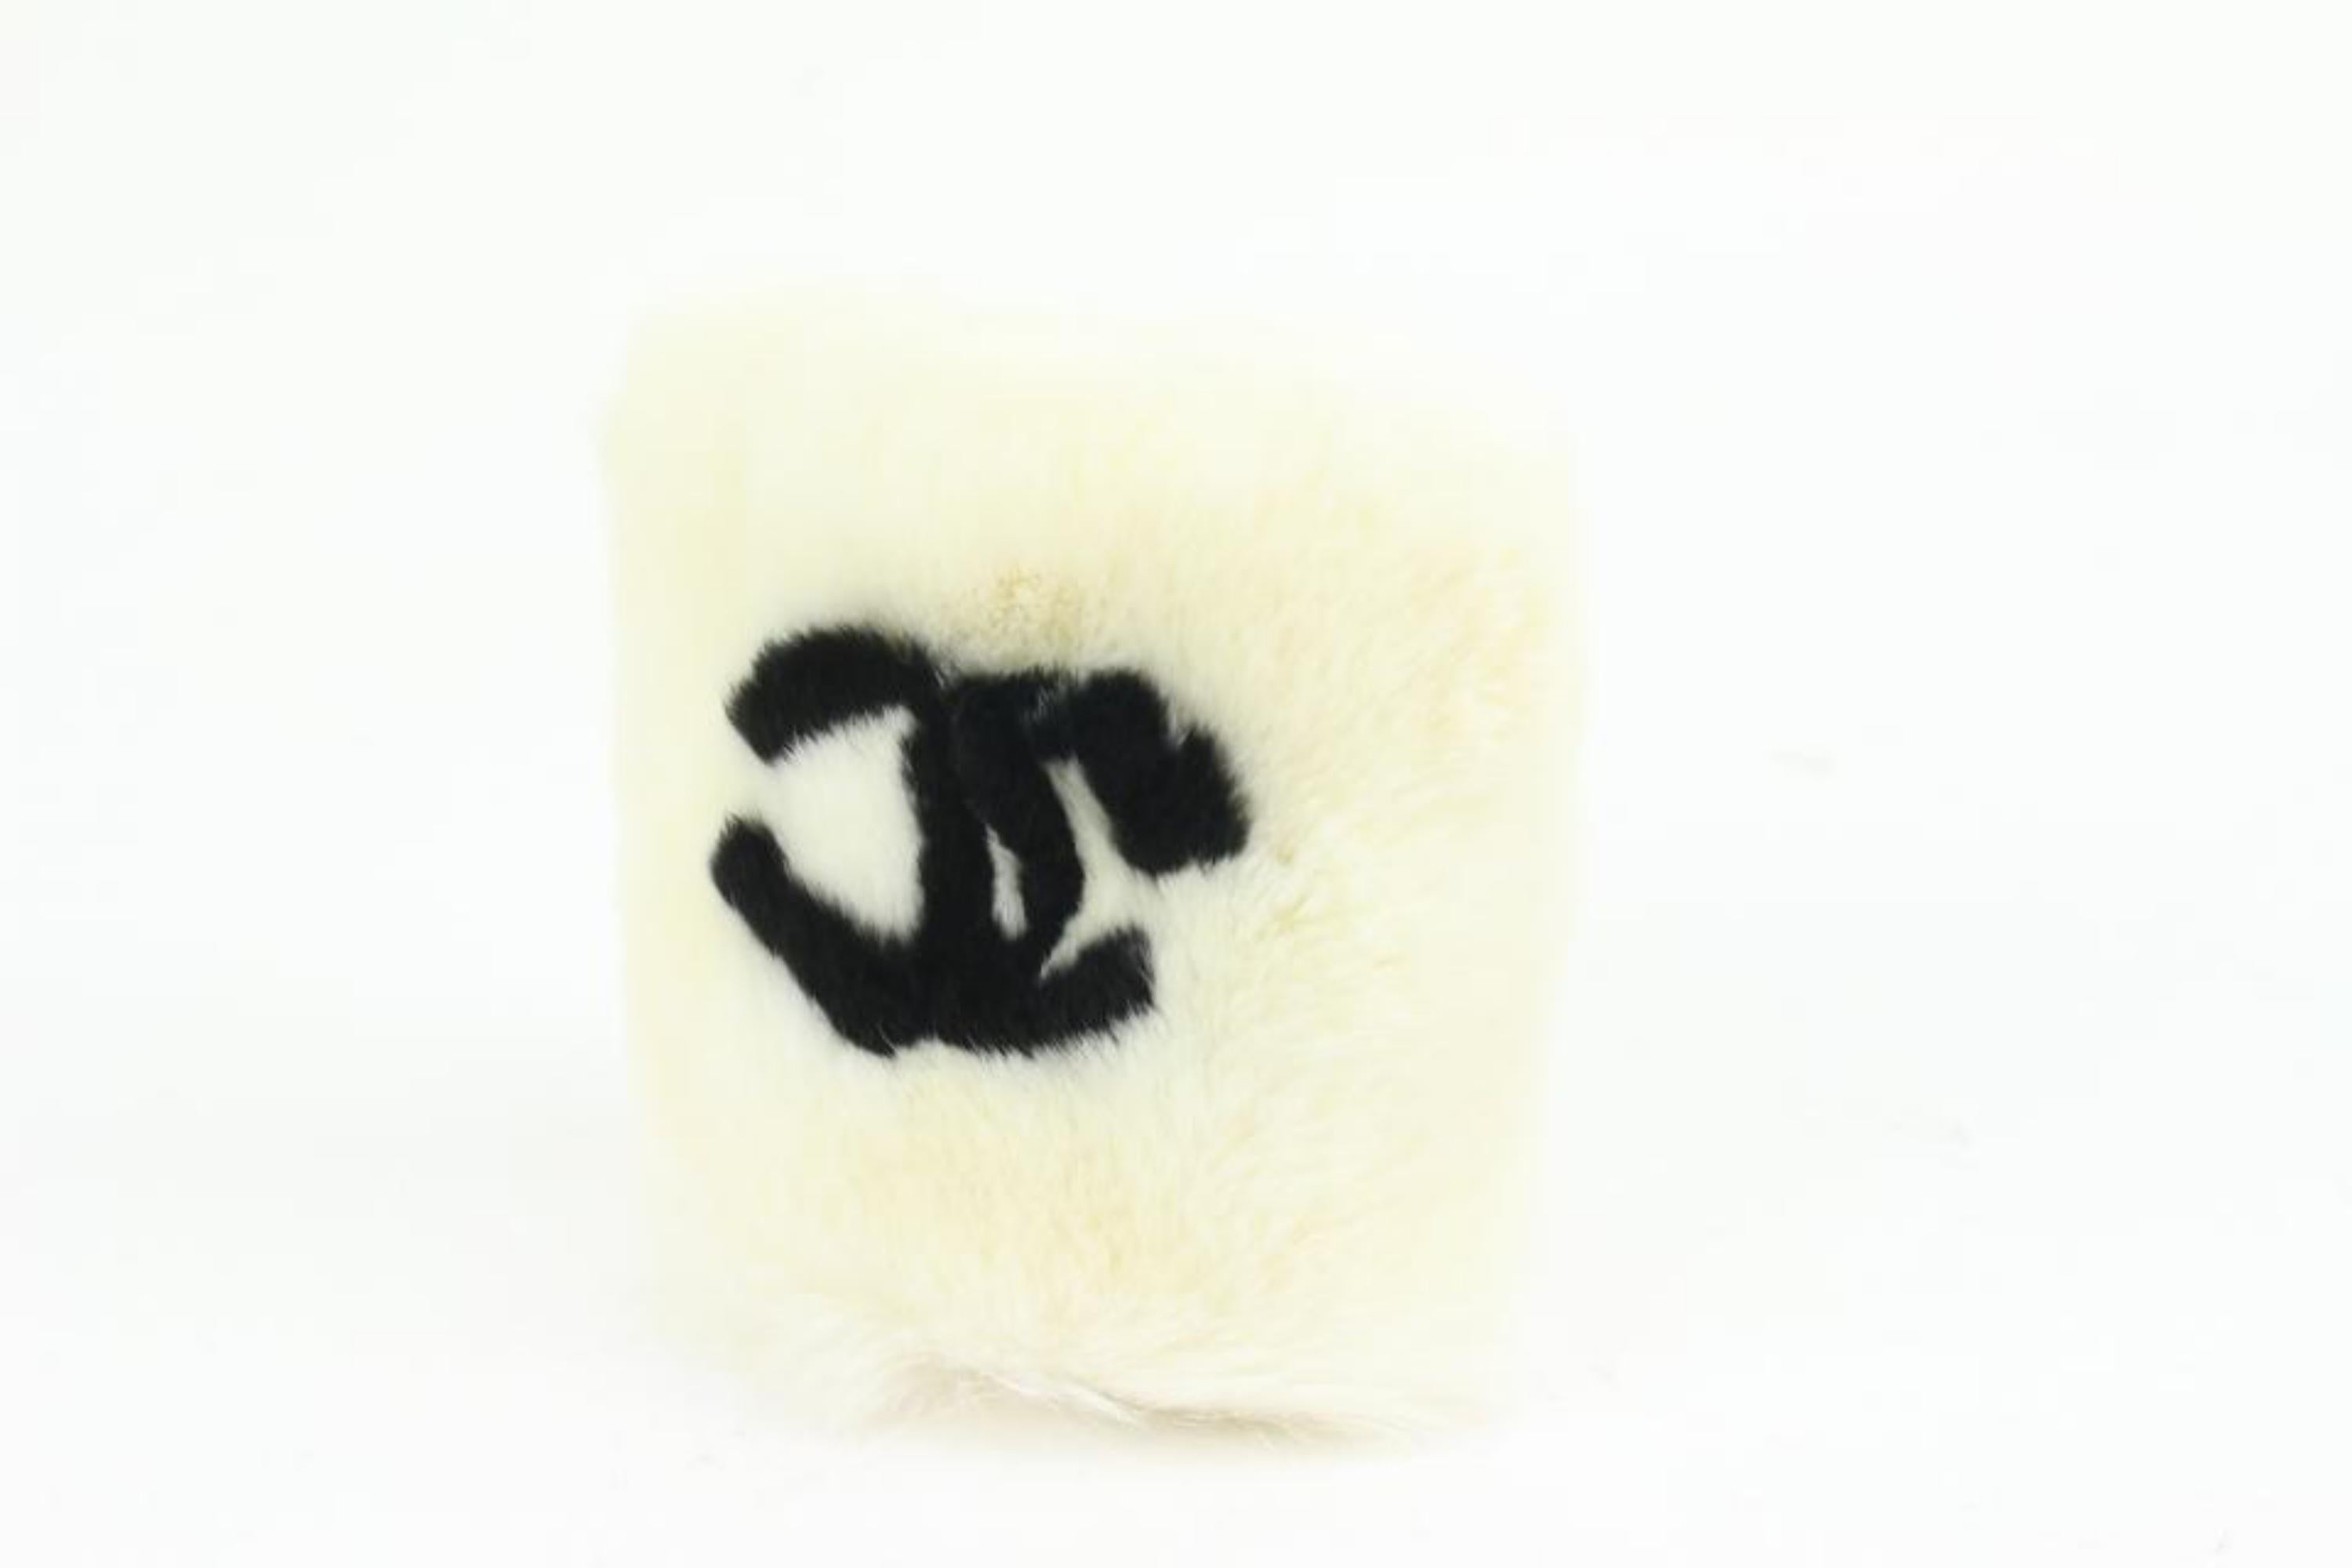 Chanel White x Black CC Rabbit Fur Wrist Band Bracelet s331ck41
Made In: France
Measurements: Length:  4